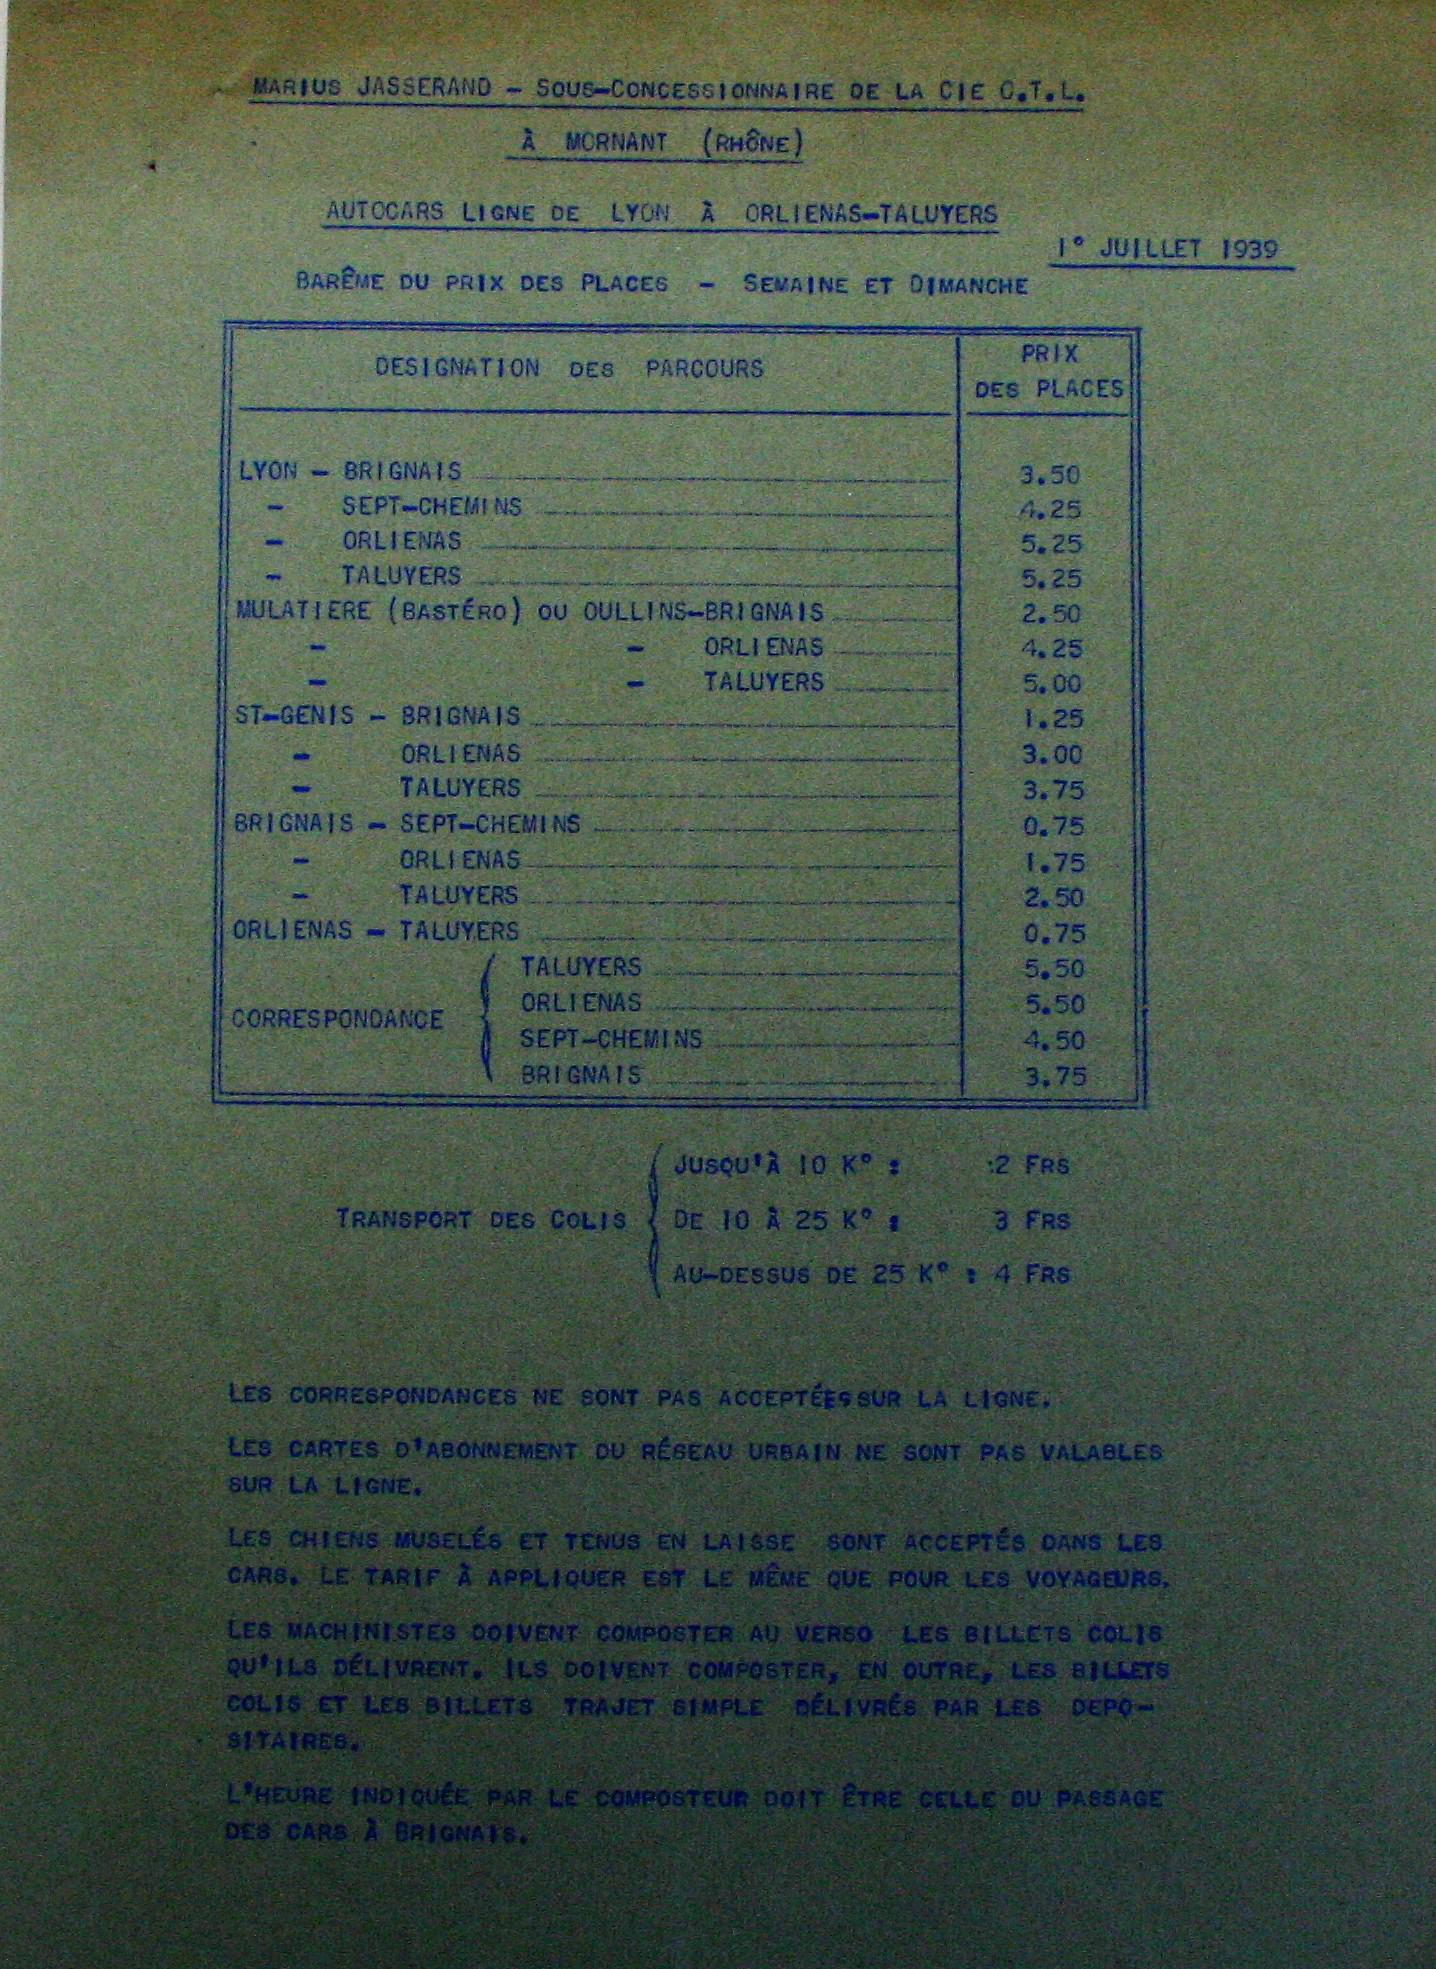 Taluyers fare table 1939